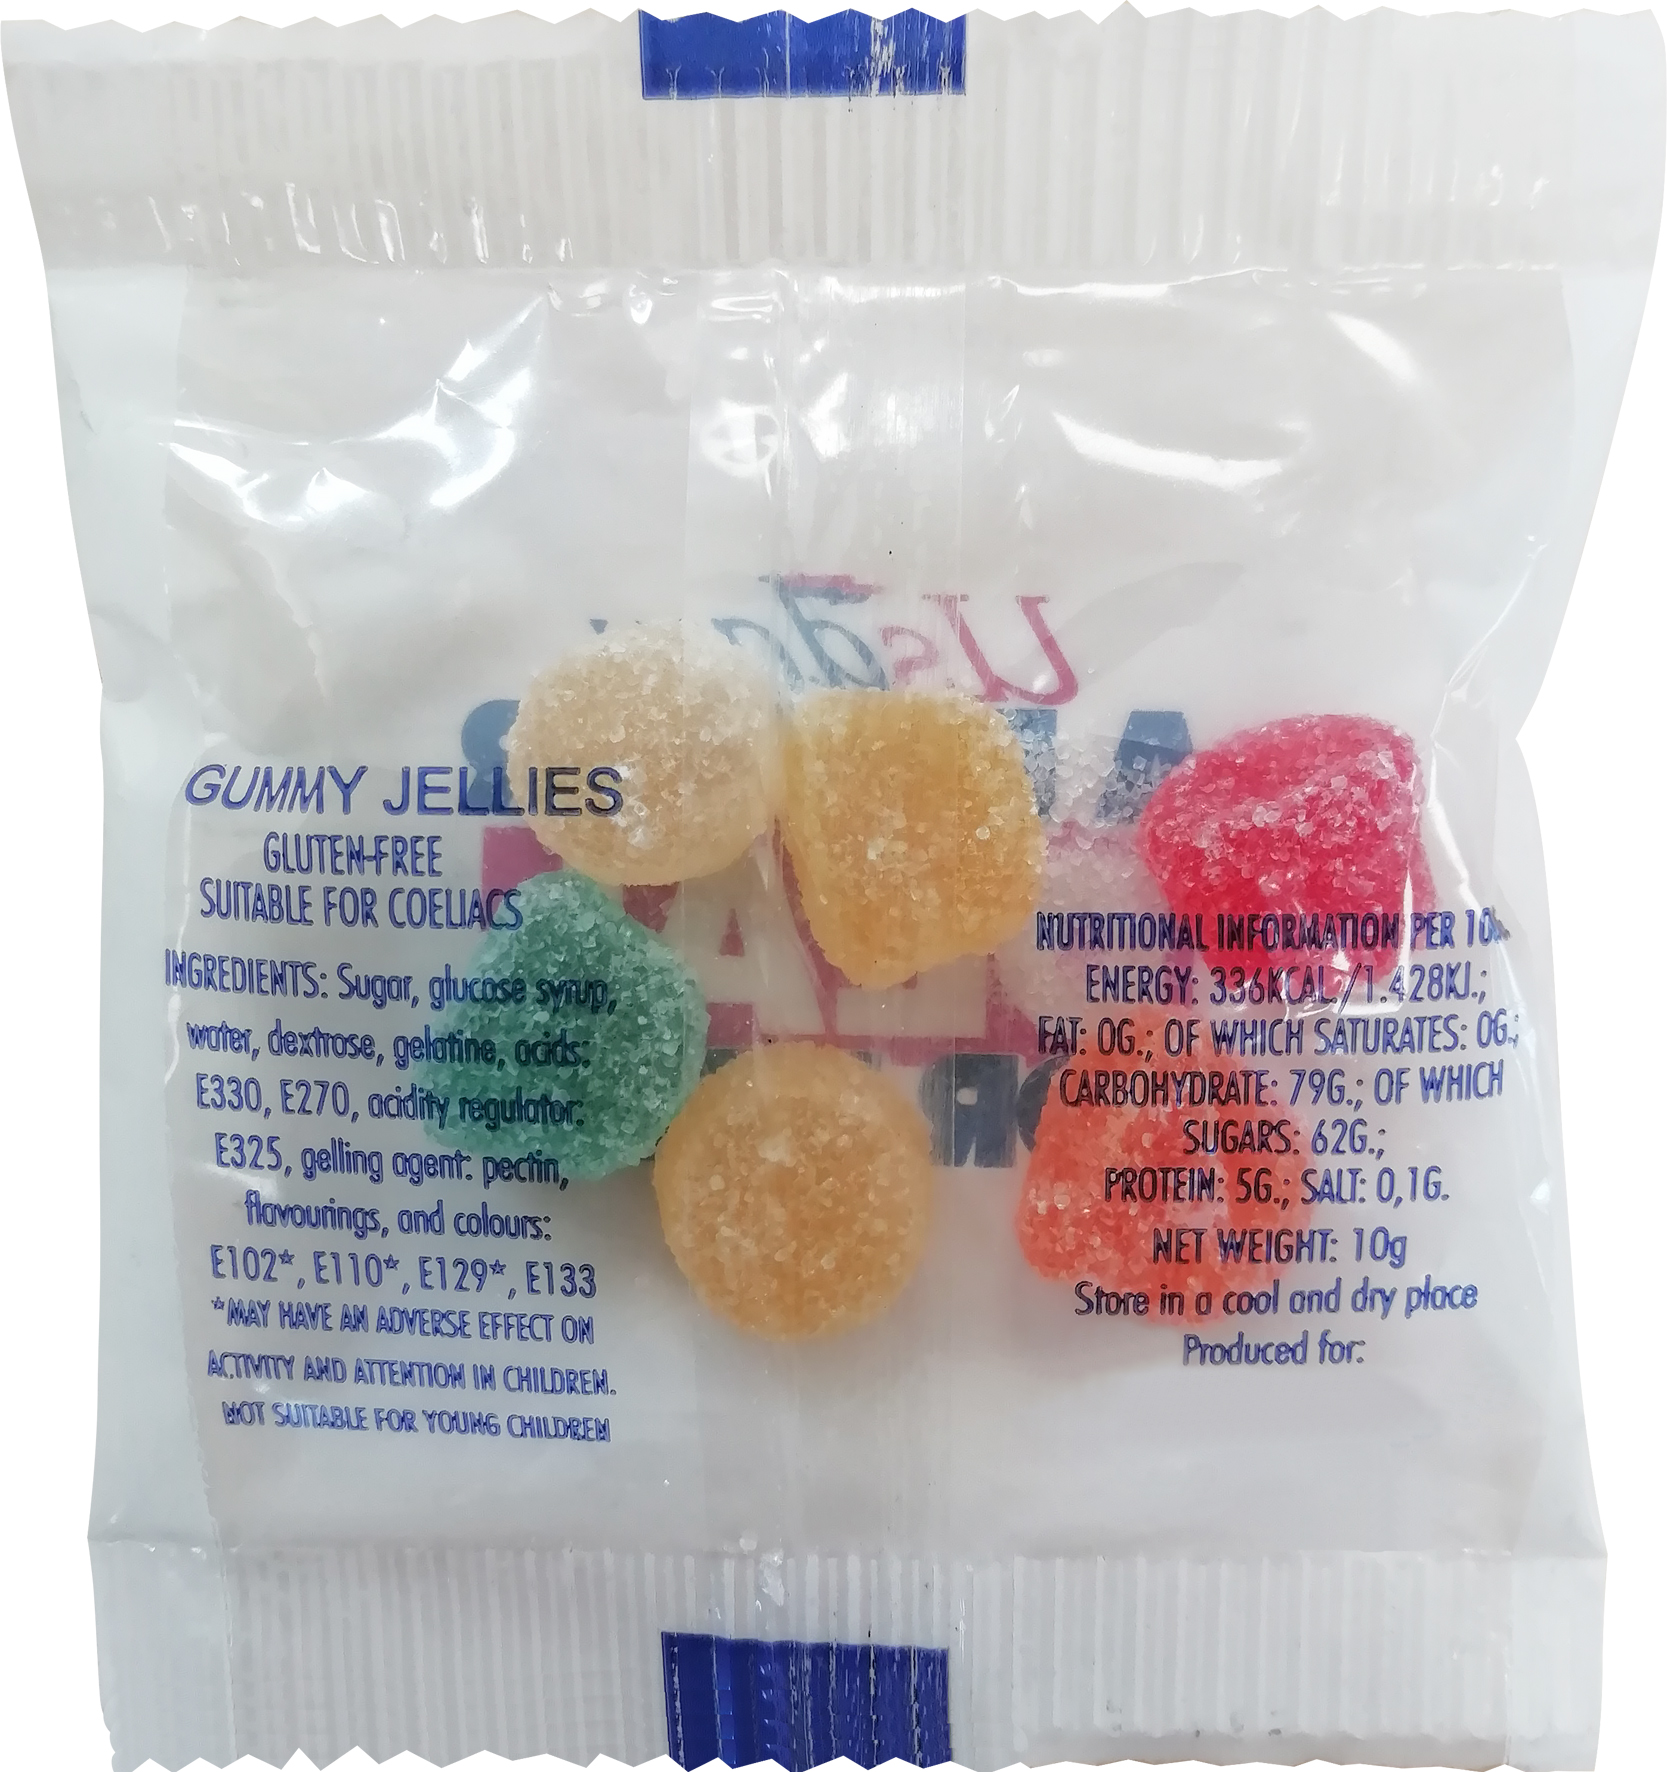 c 0071fp 00 09 - Jelly bean bag (7.5g)